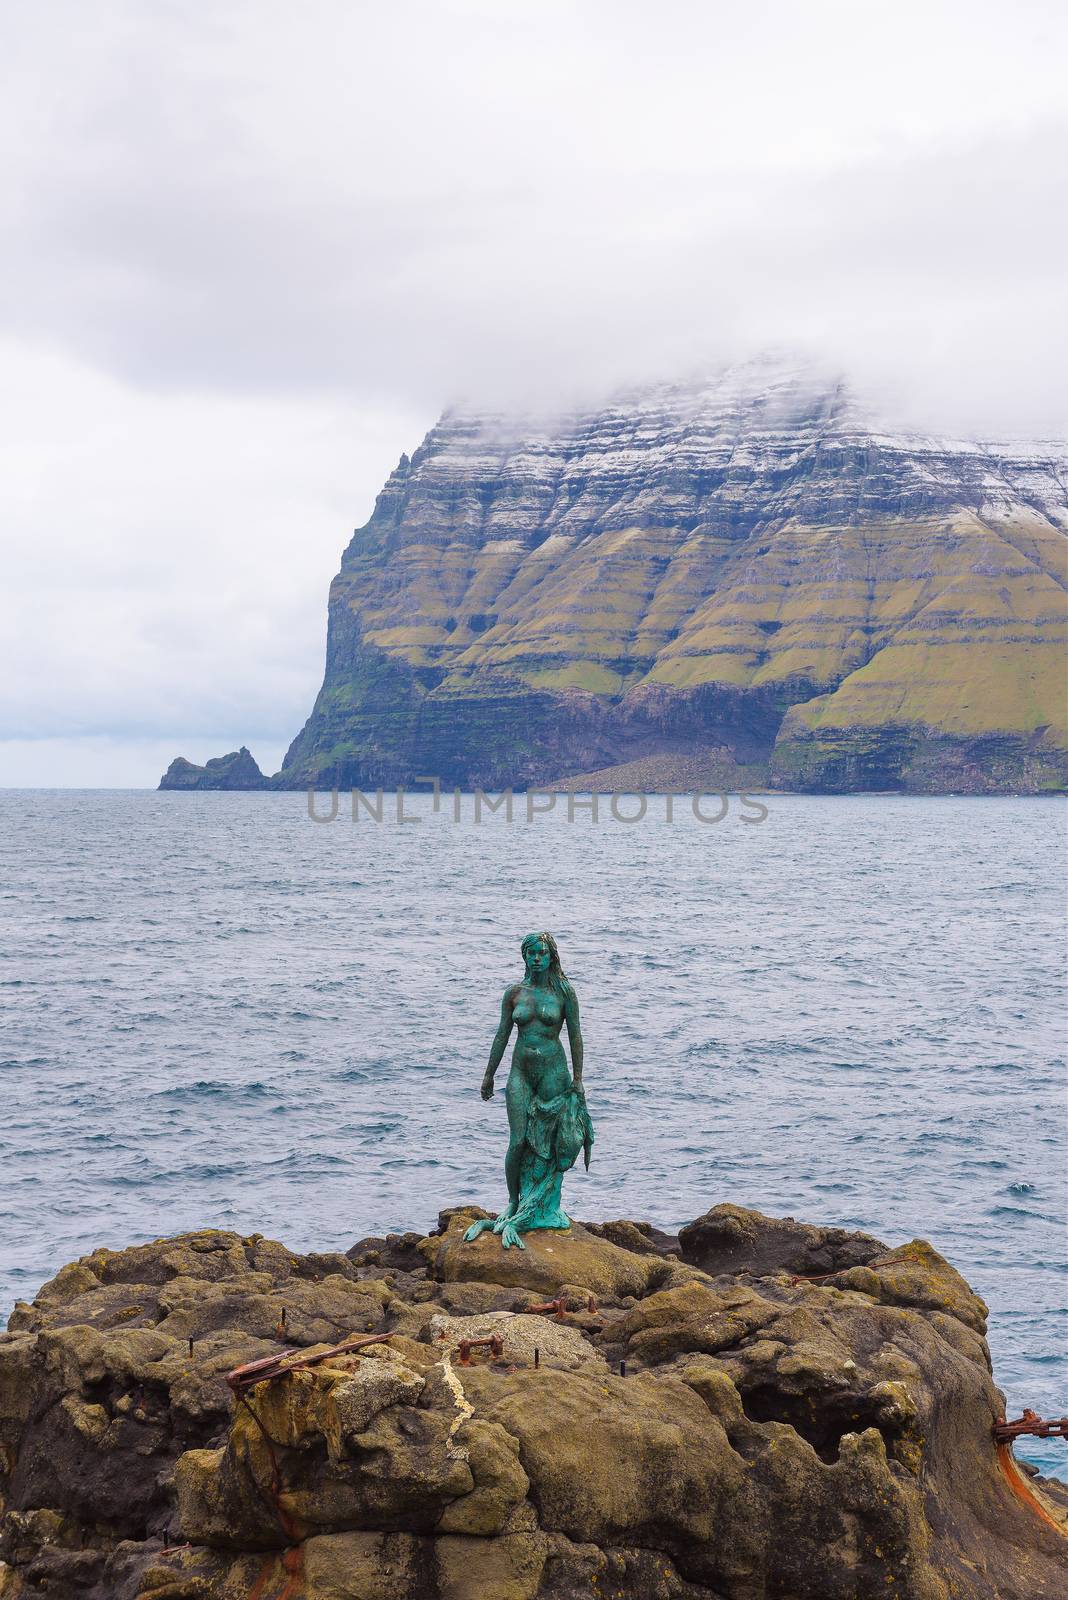 Statue of Selkie or Seal Wife in Mikladalur, Faroe Islands by nickfox